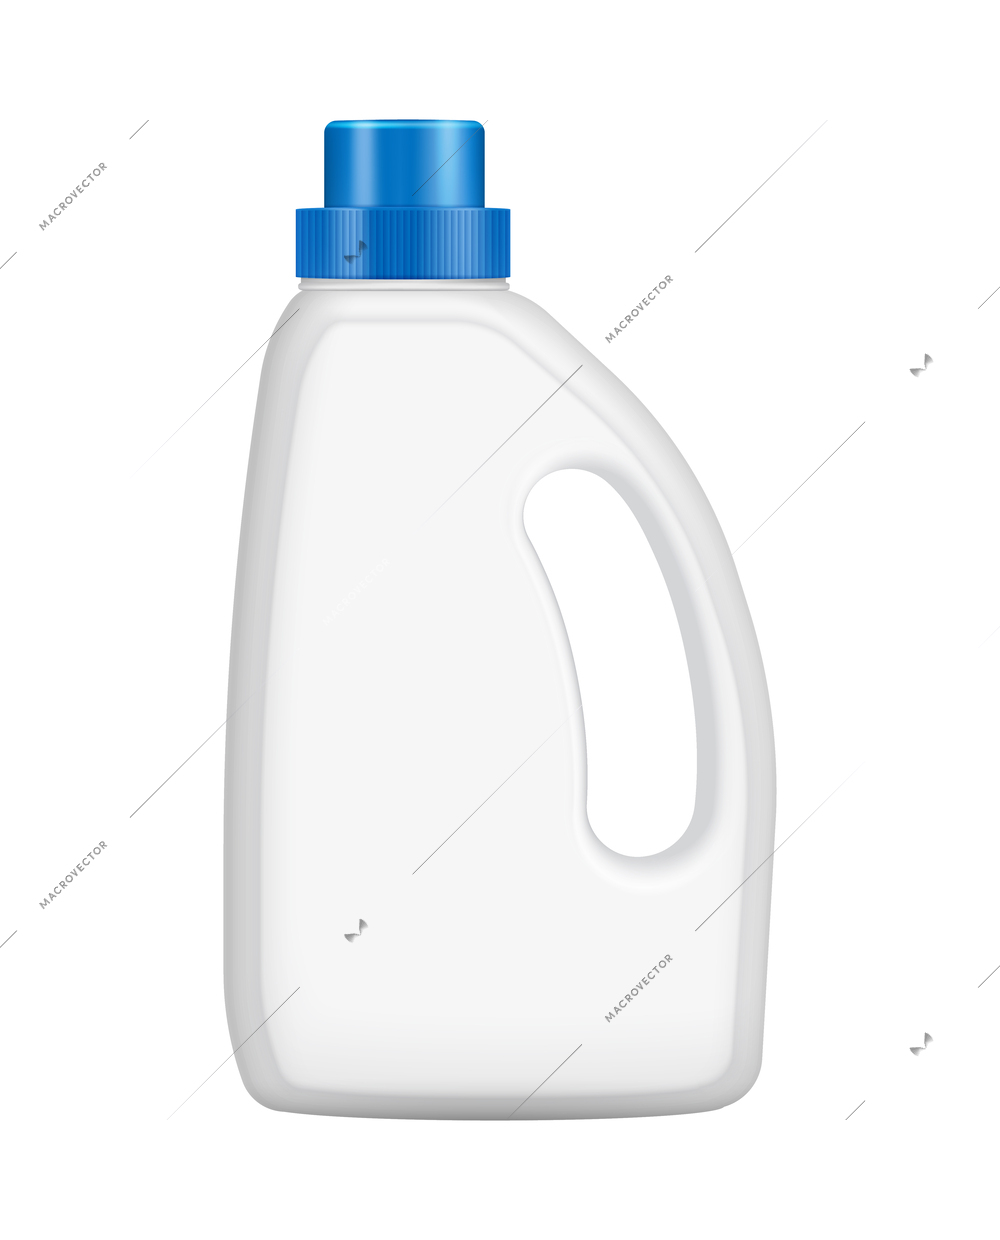 Realistic plastic bottle for liquid laundry detergent vector illustration